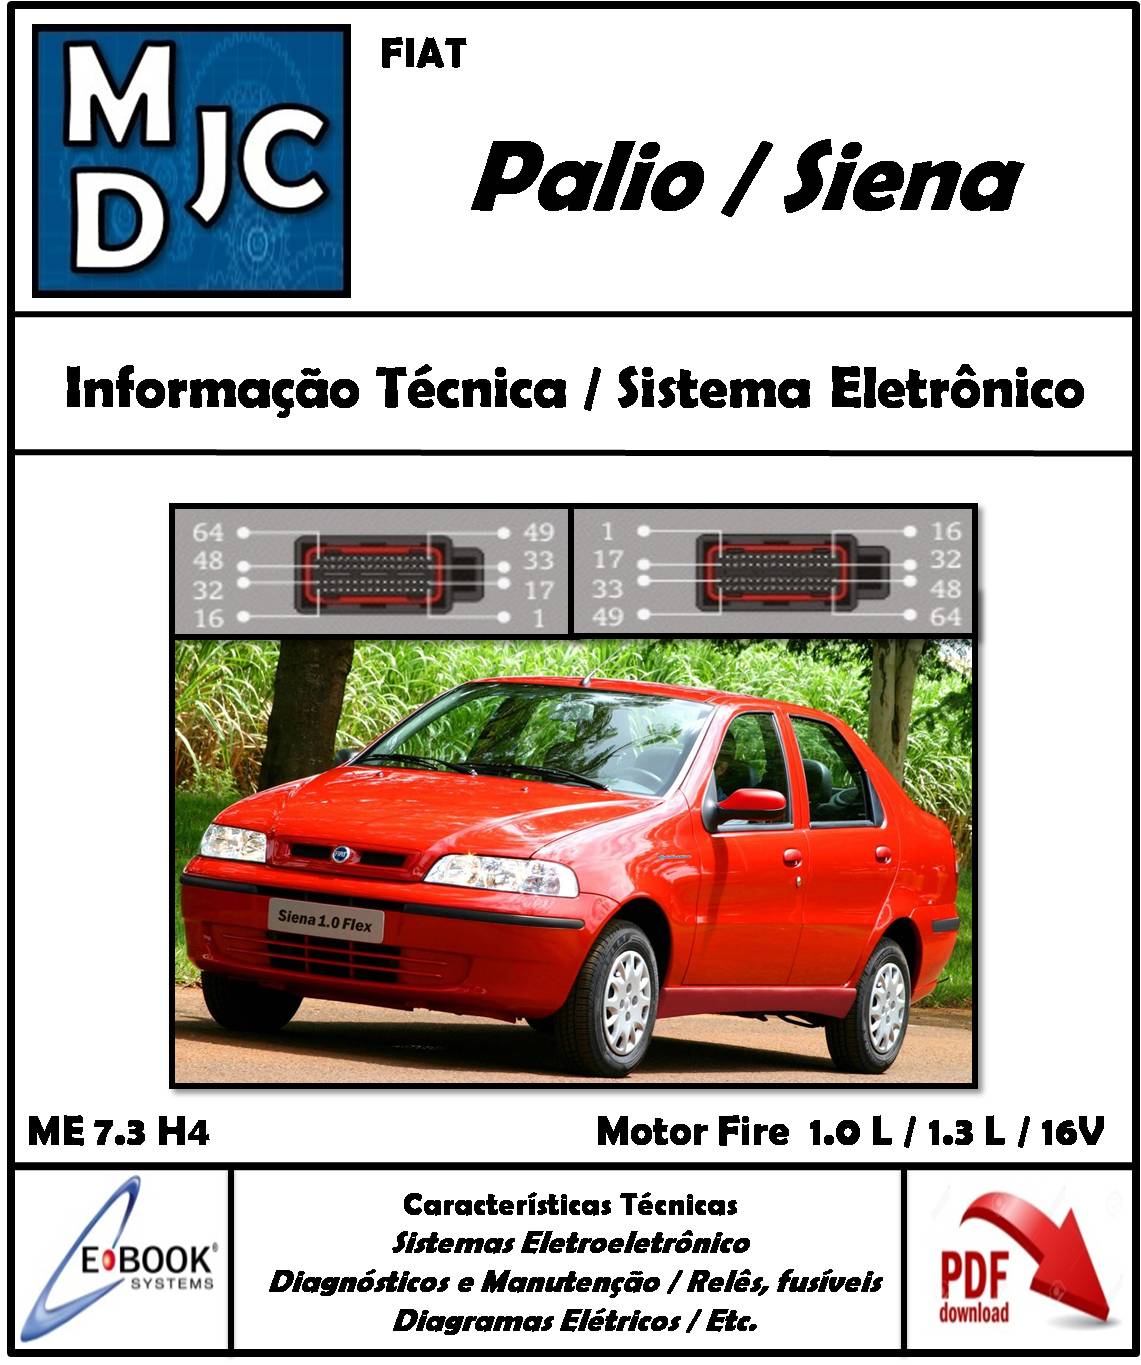 Fiat Palio / Siena Fire 1.0 L / 1.3 L / 16V